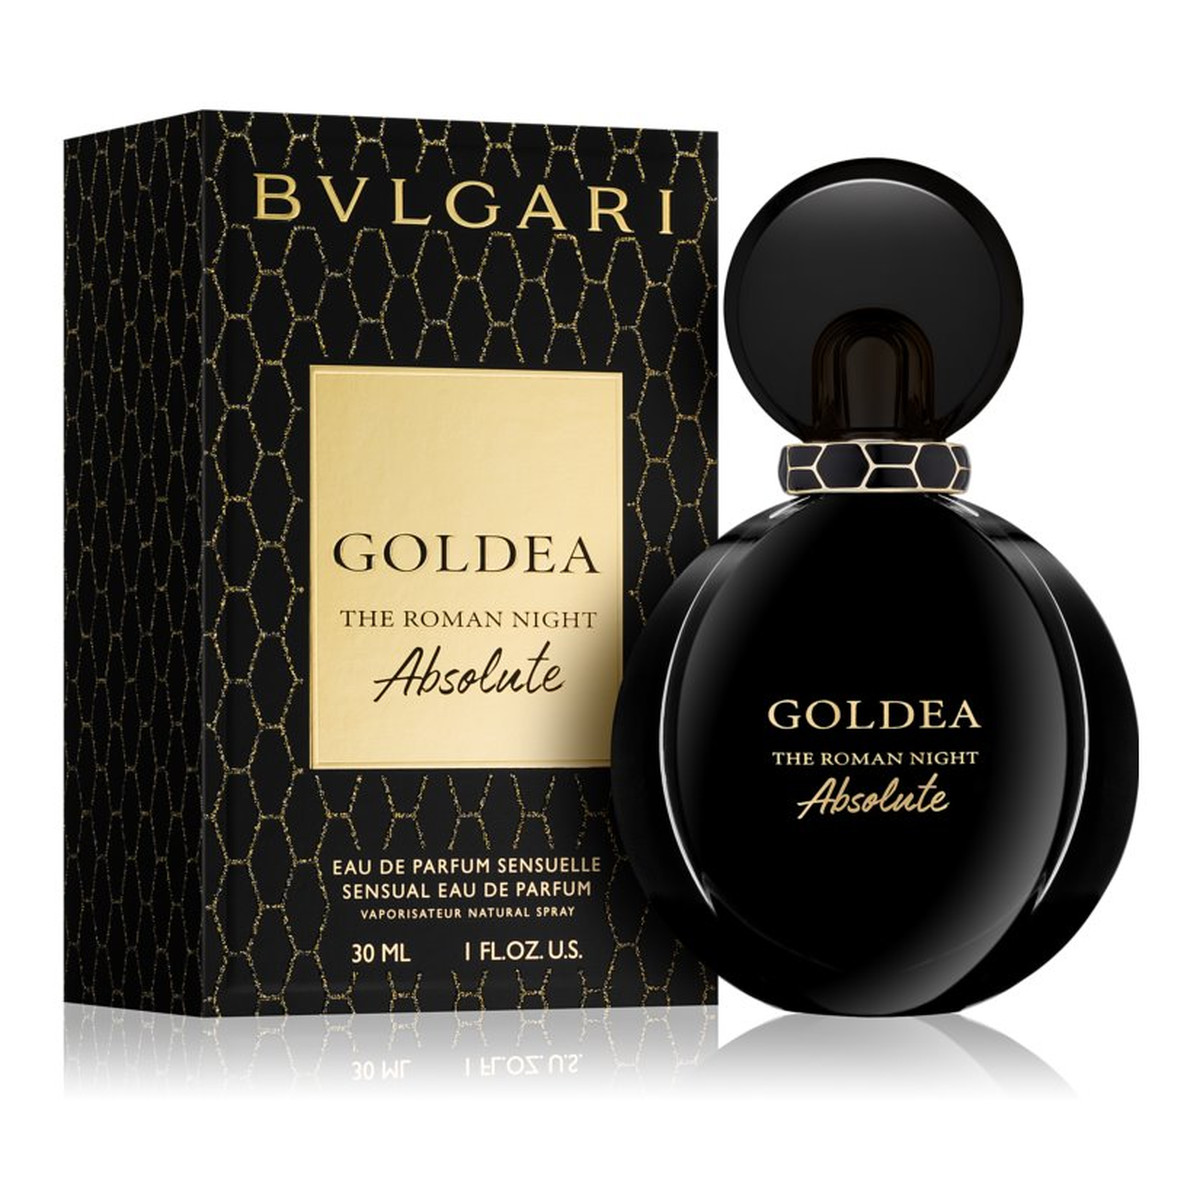 Bvlgari Goldea The Roman Night Absolute woda perfumowana 30ml